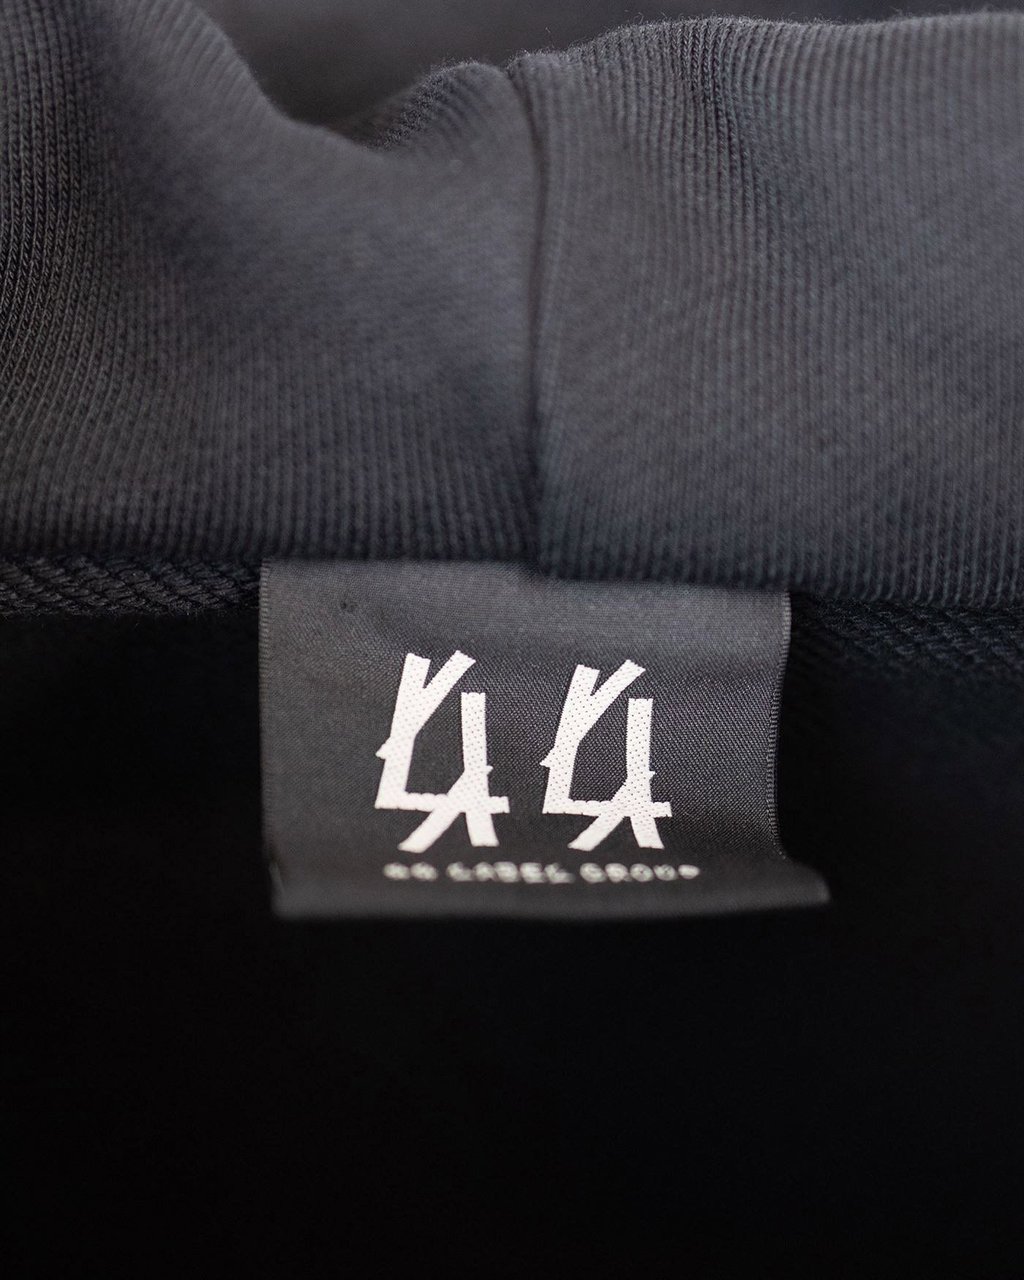 44 Label Group 44 Label Sweaters Black Zwart